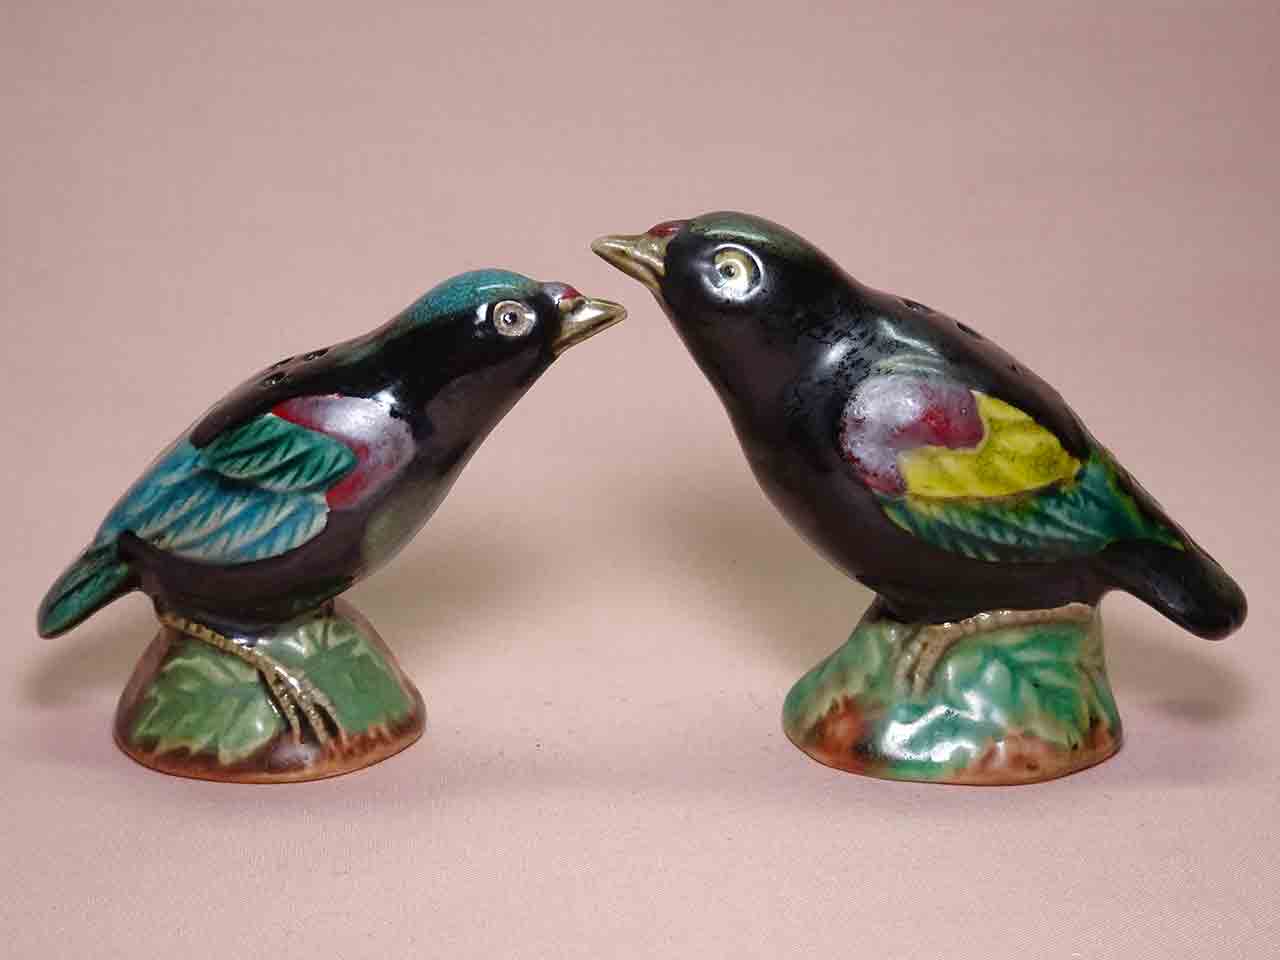 Vintage Made in Japan birds salt and pepper shakers - Red-Winged Blackbirds